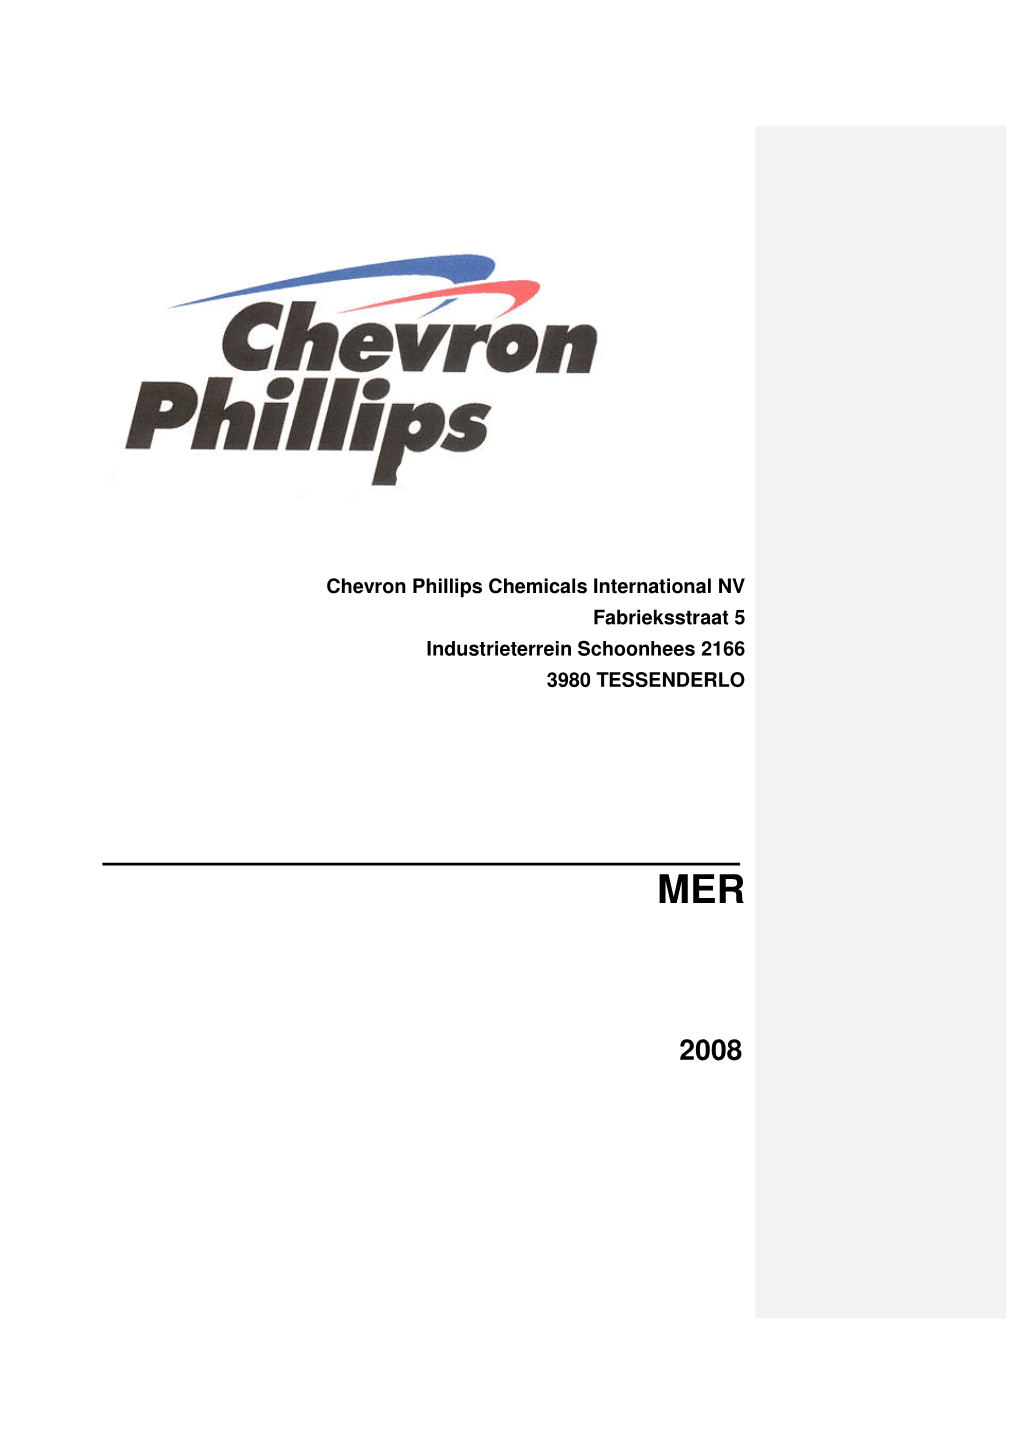 Chevron Phillips Chemicals International NV Fabrieksstraat 5 Industrieterrein Schoonhees 2166 3980 TESSENDERLO